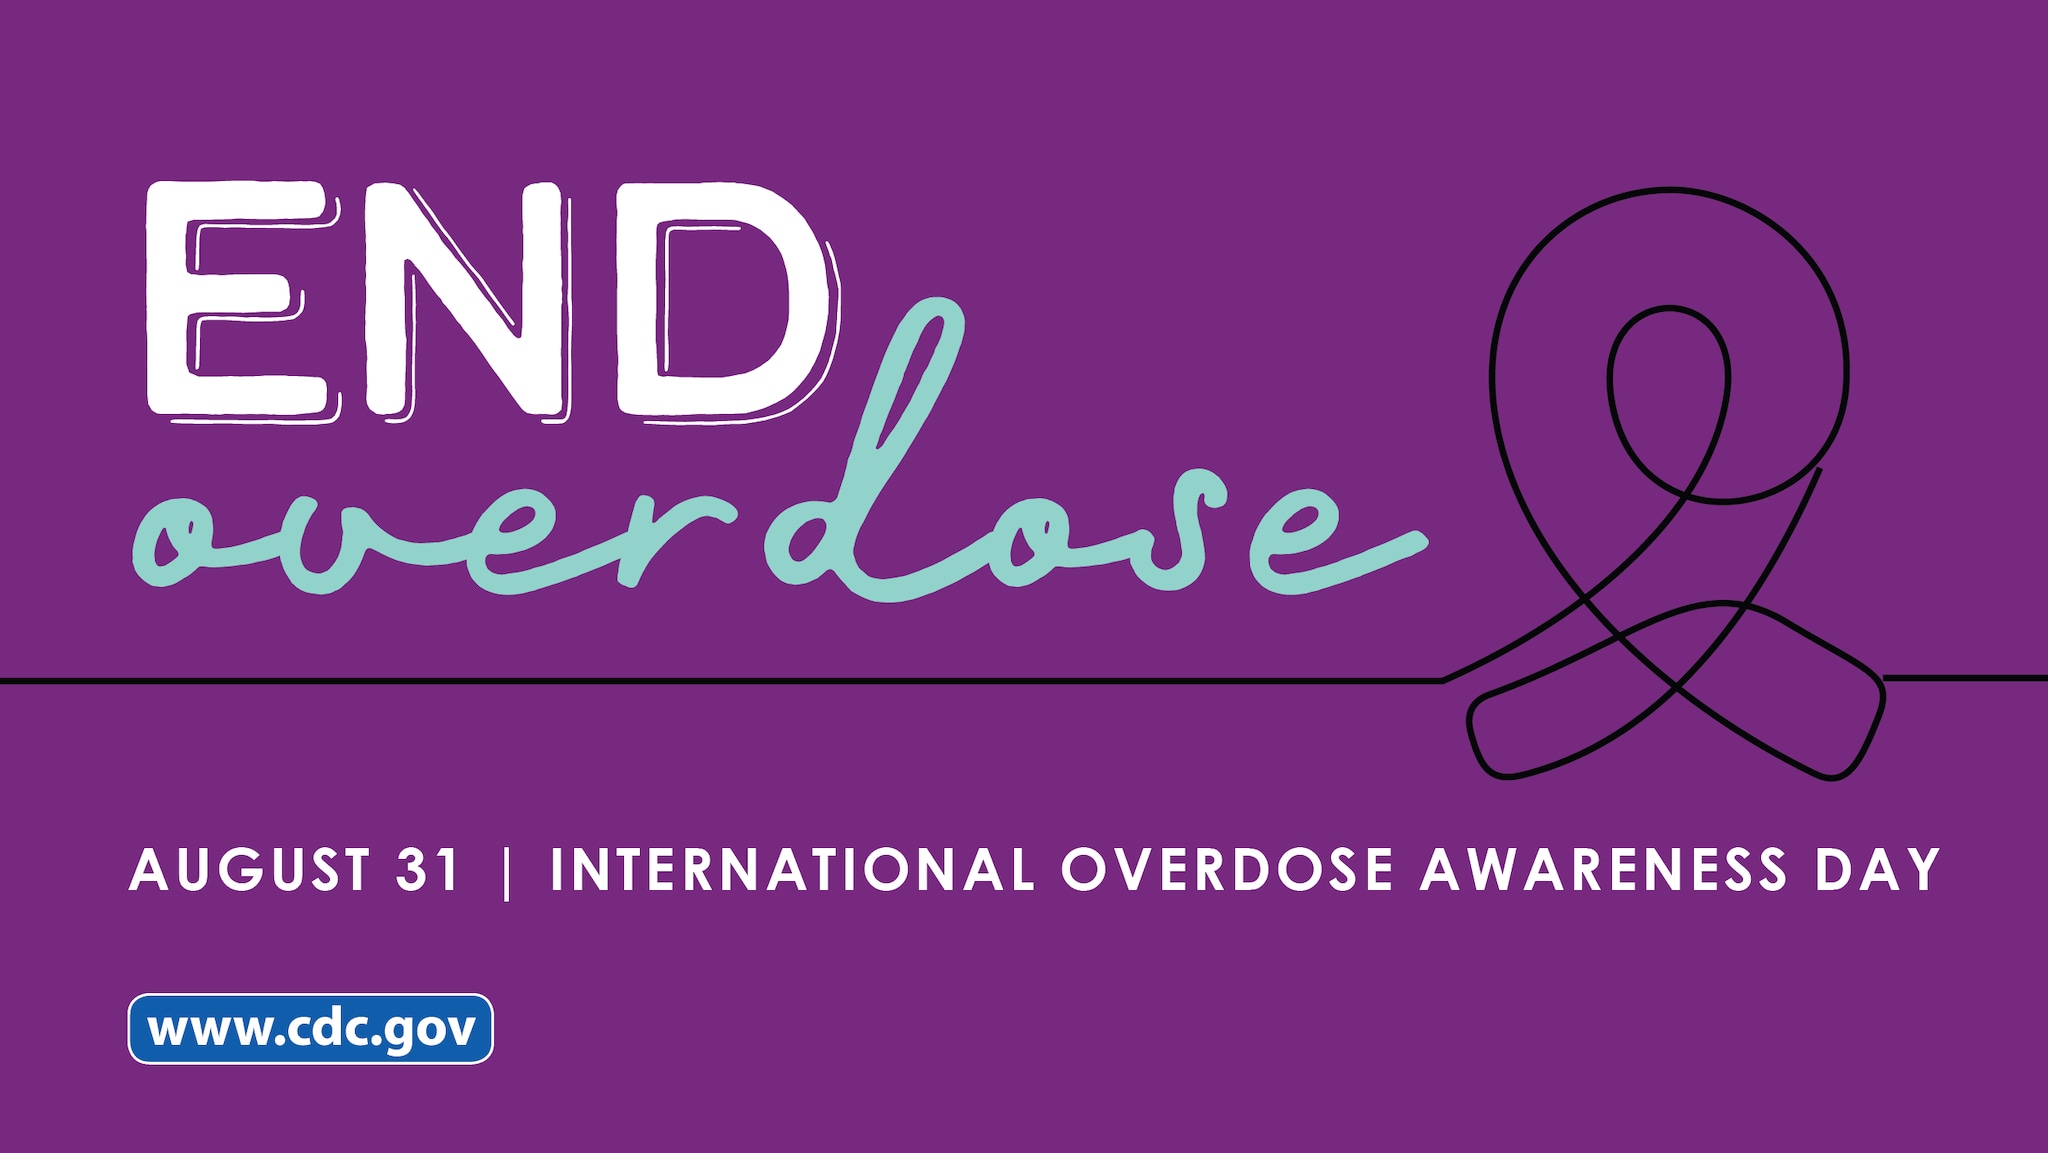 "End overdose. August 31. International Overdose Awareness Day"